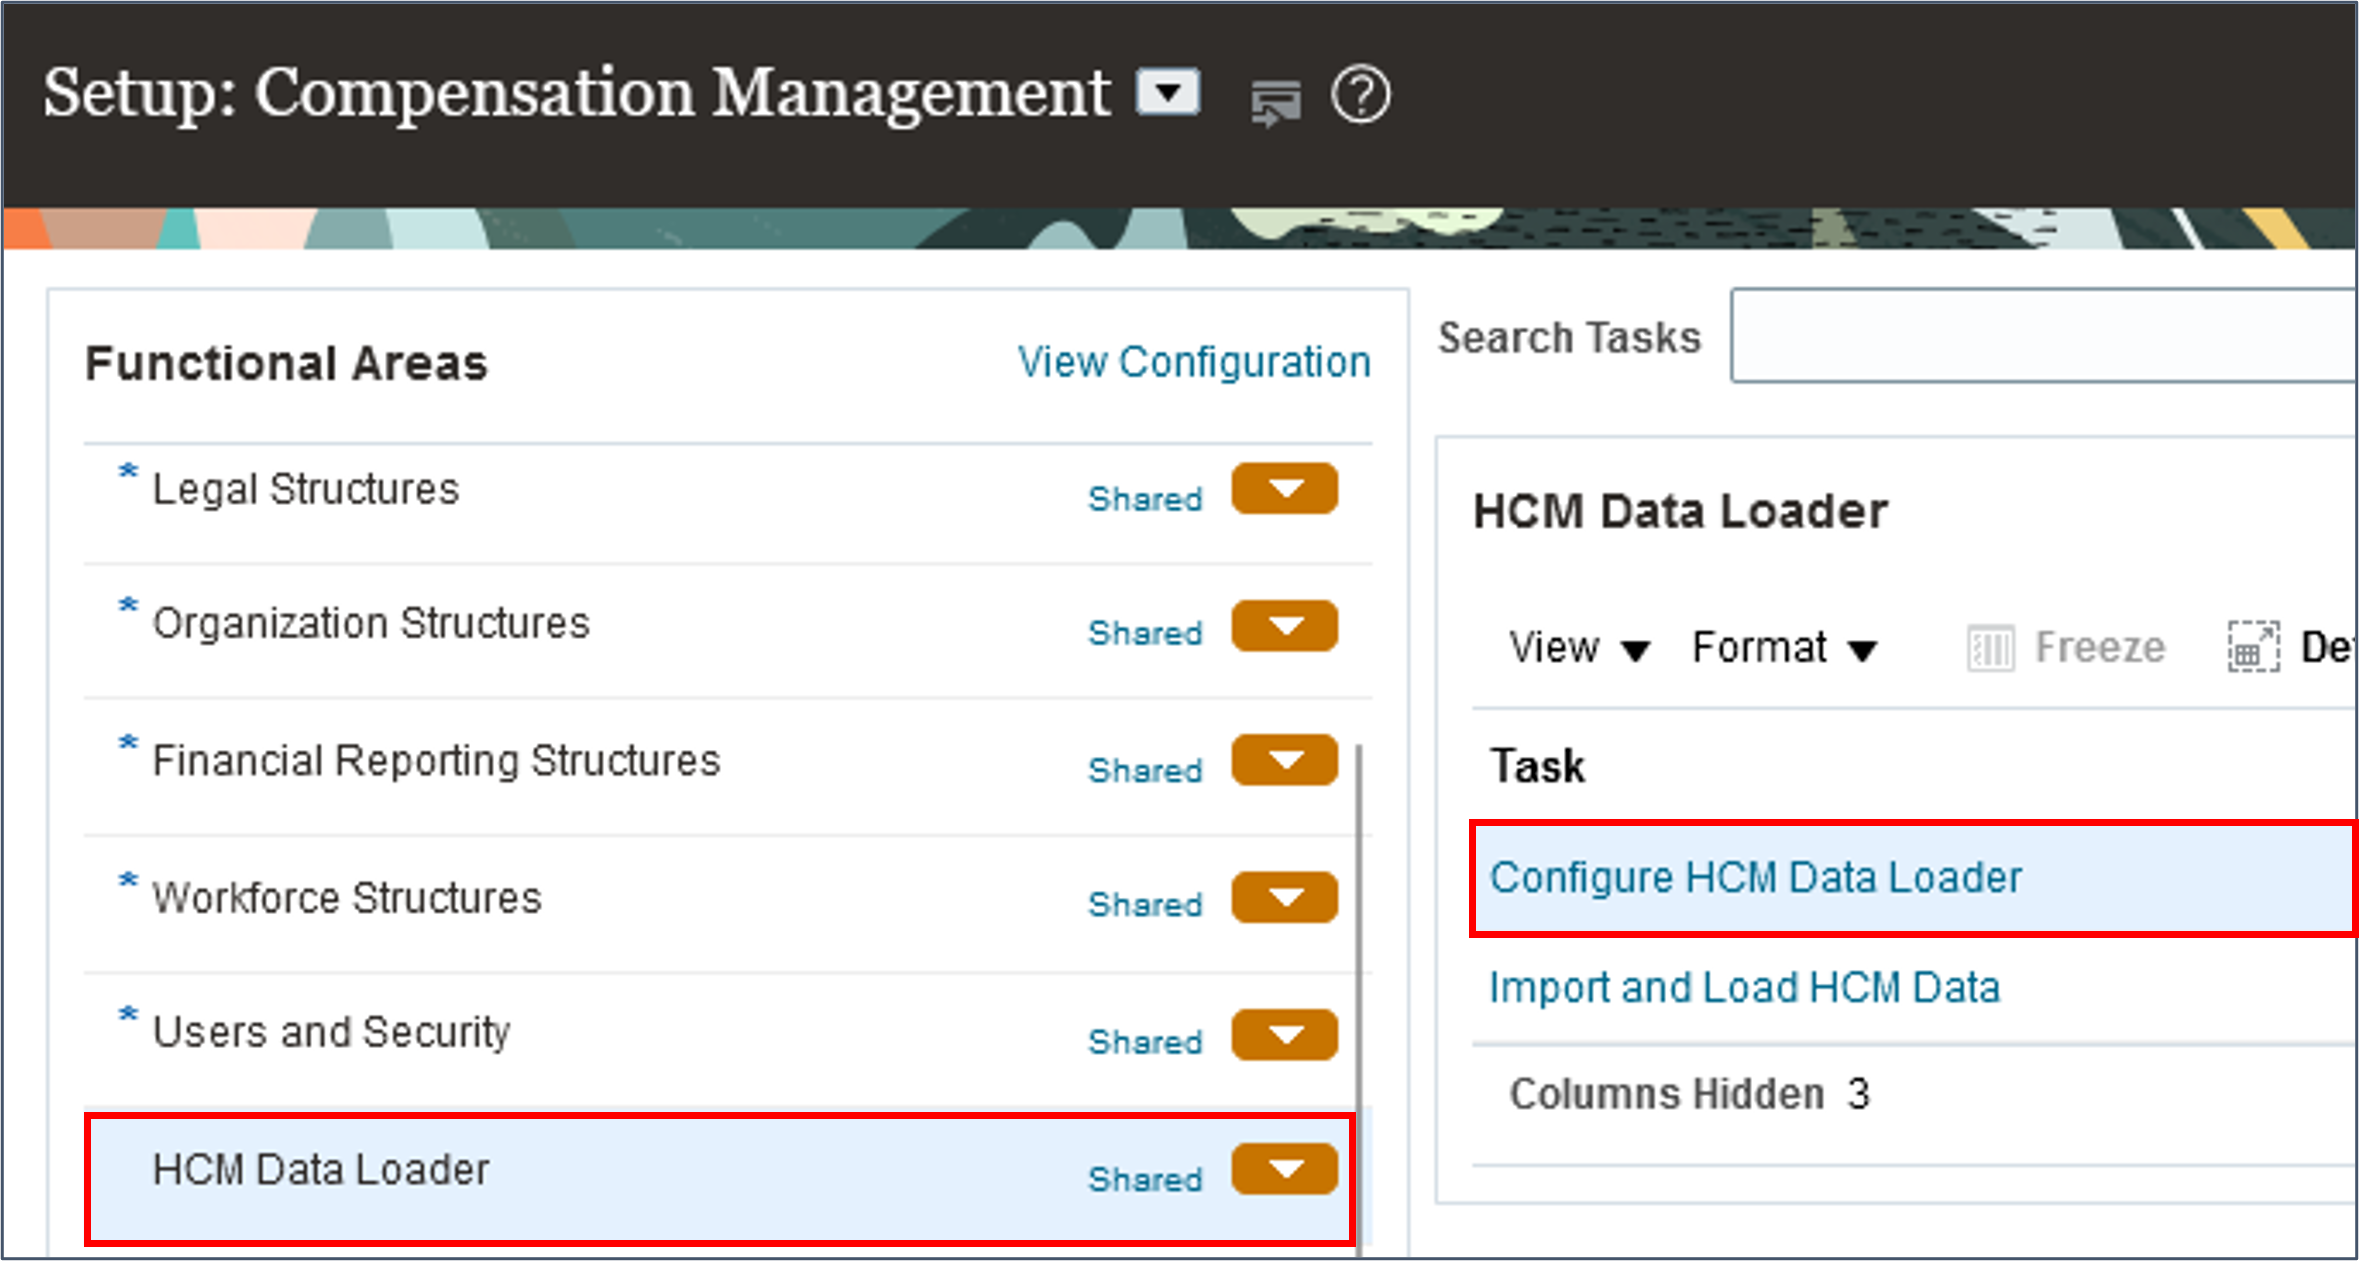 Click the HCM Data Loader task within the HCM Data Loader functional area.